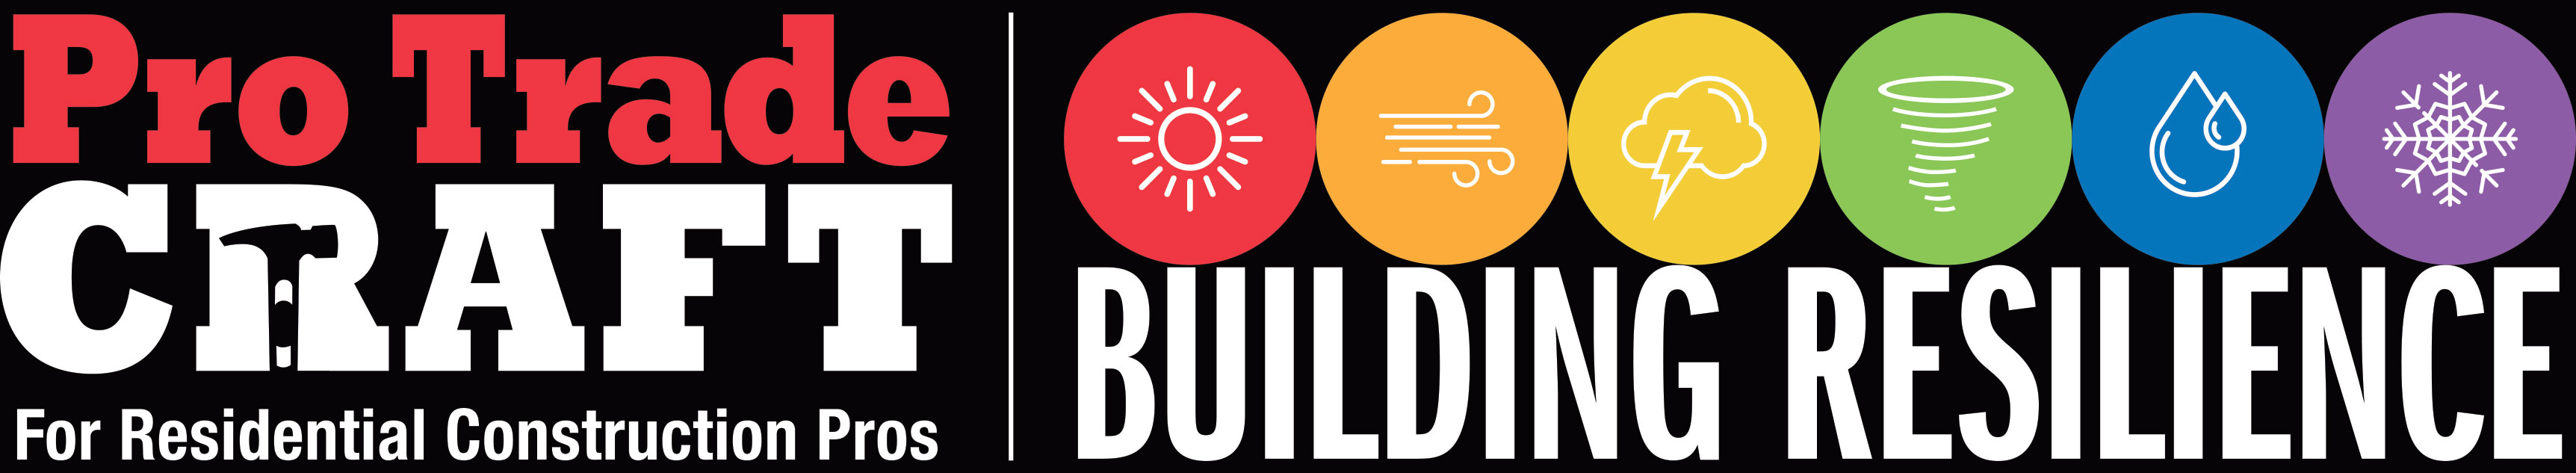 PTC_Building-Resilience_logo